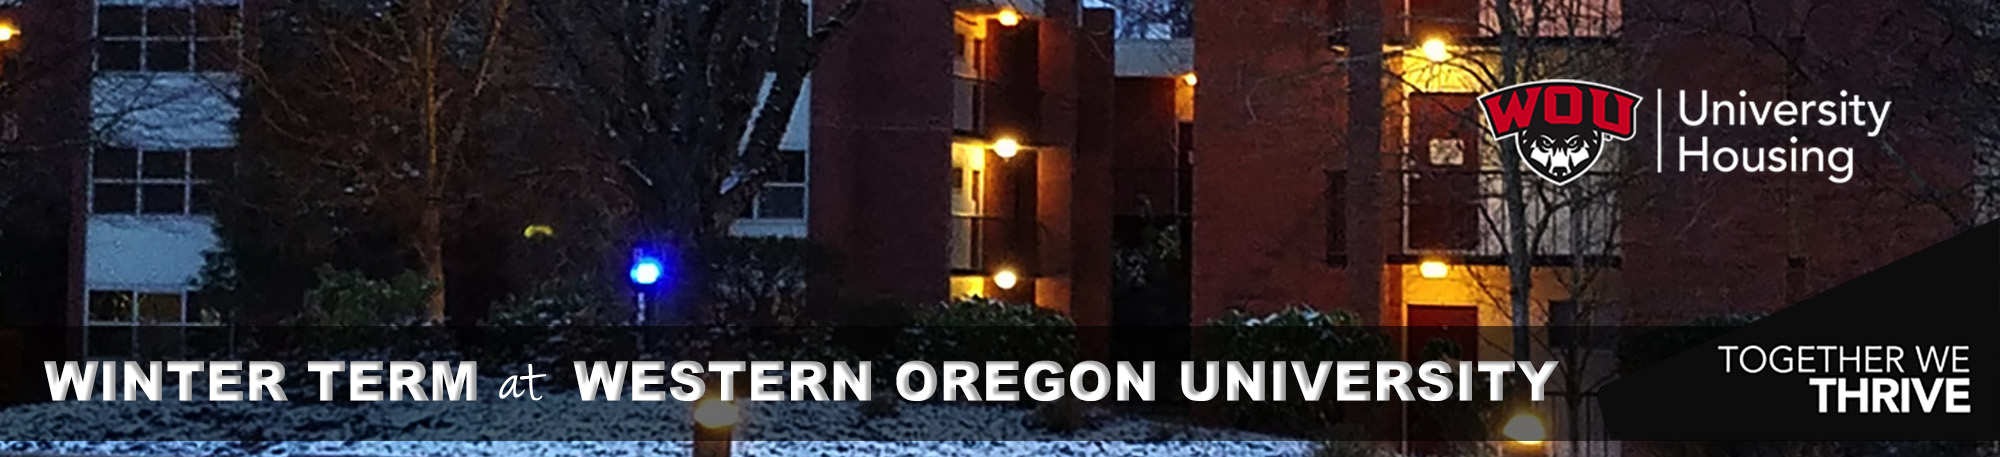 Winter Term at Western Oregon University